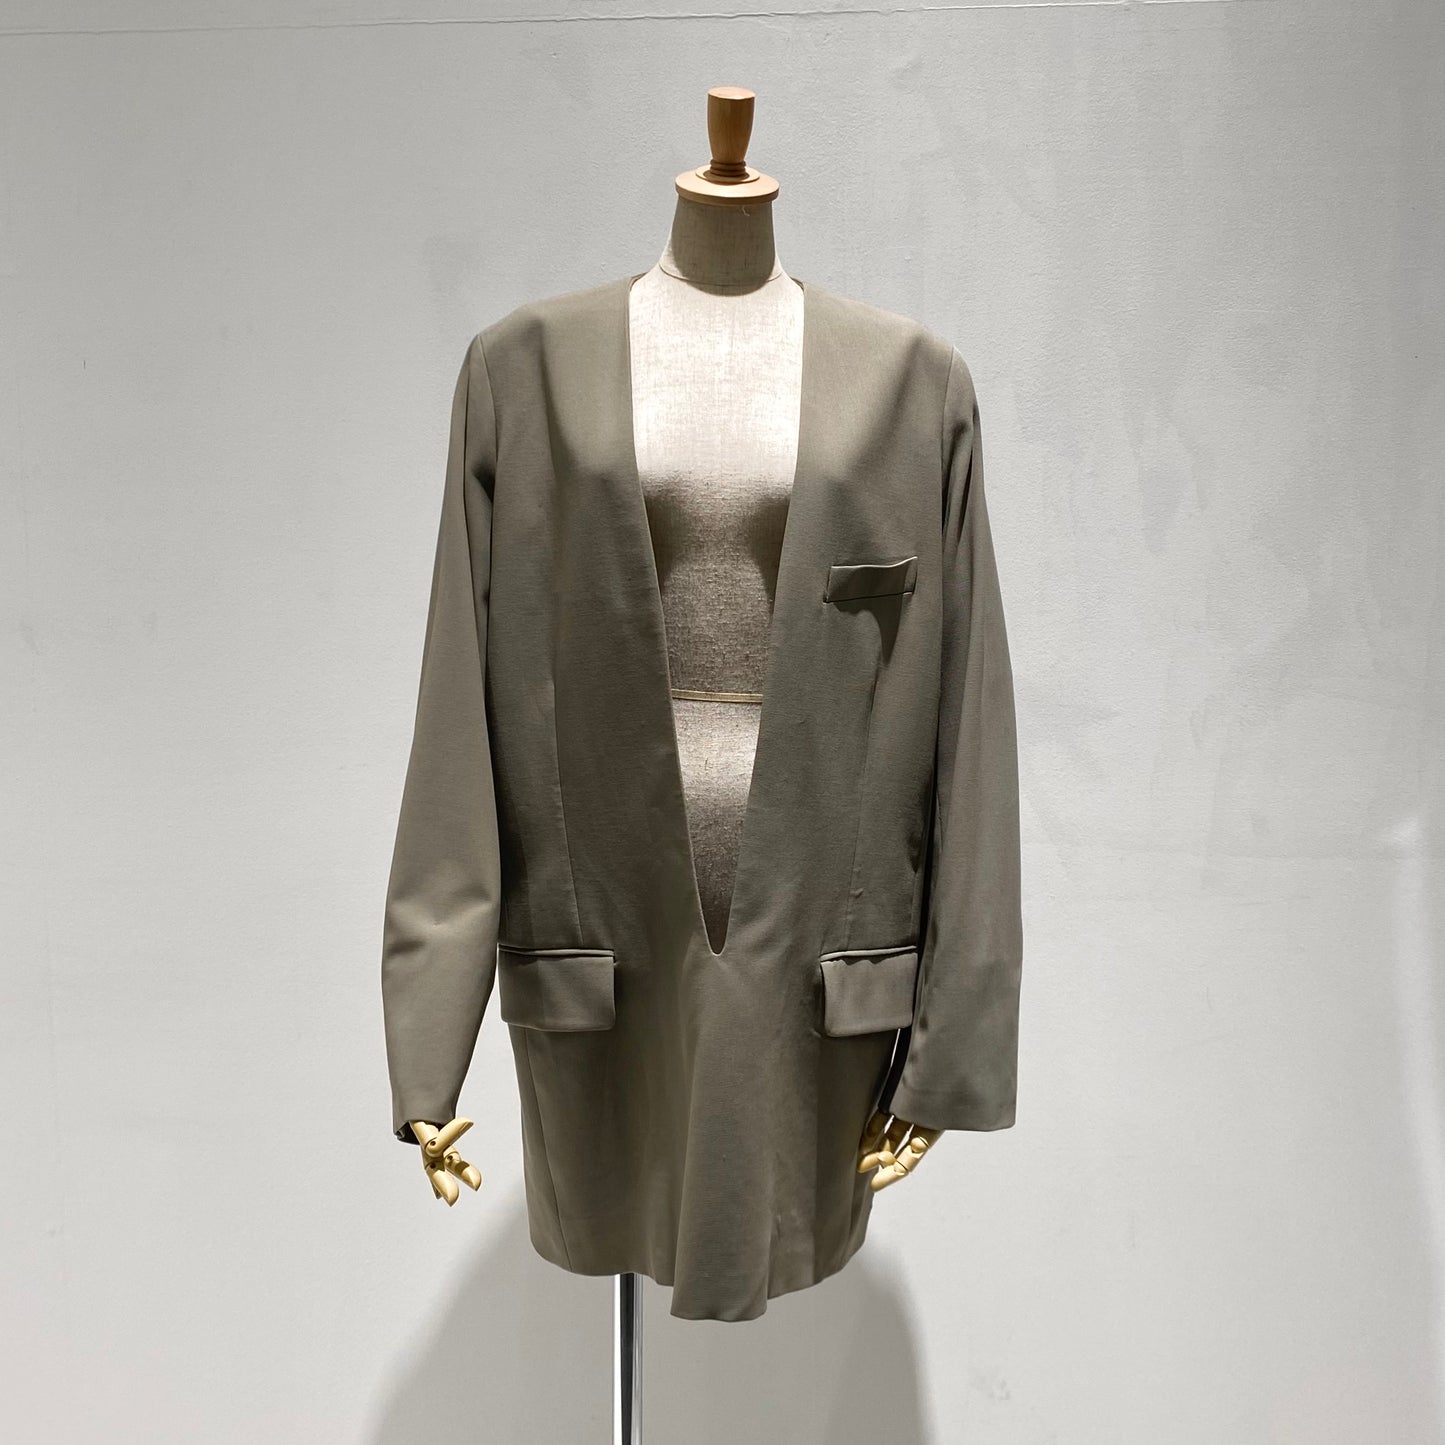 Spring1999 Hermès by Martin Margiela Vareuse jacket